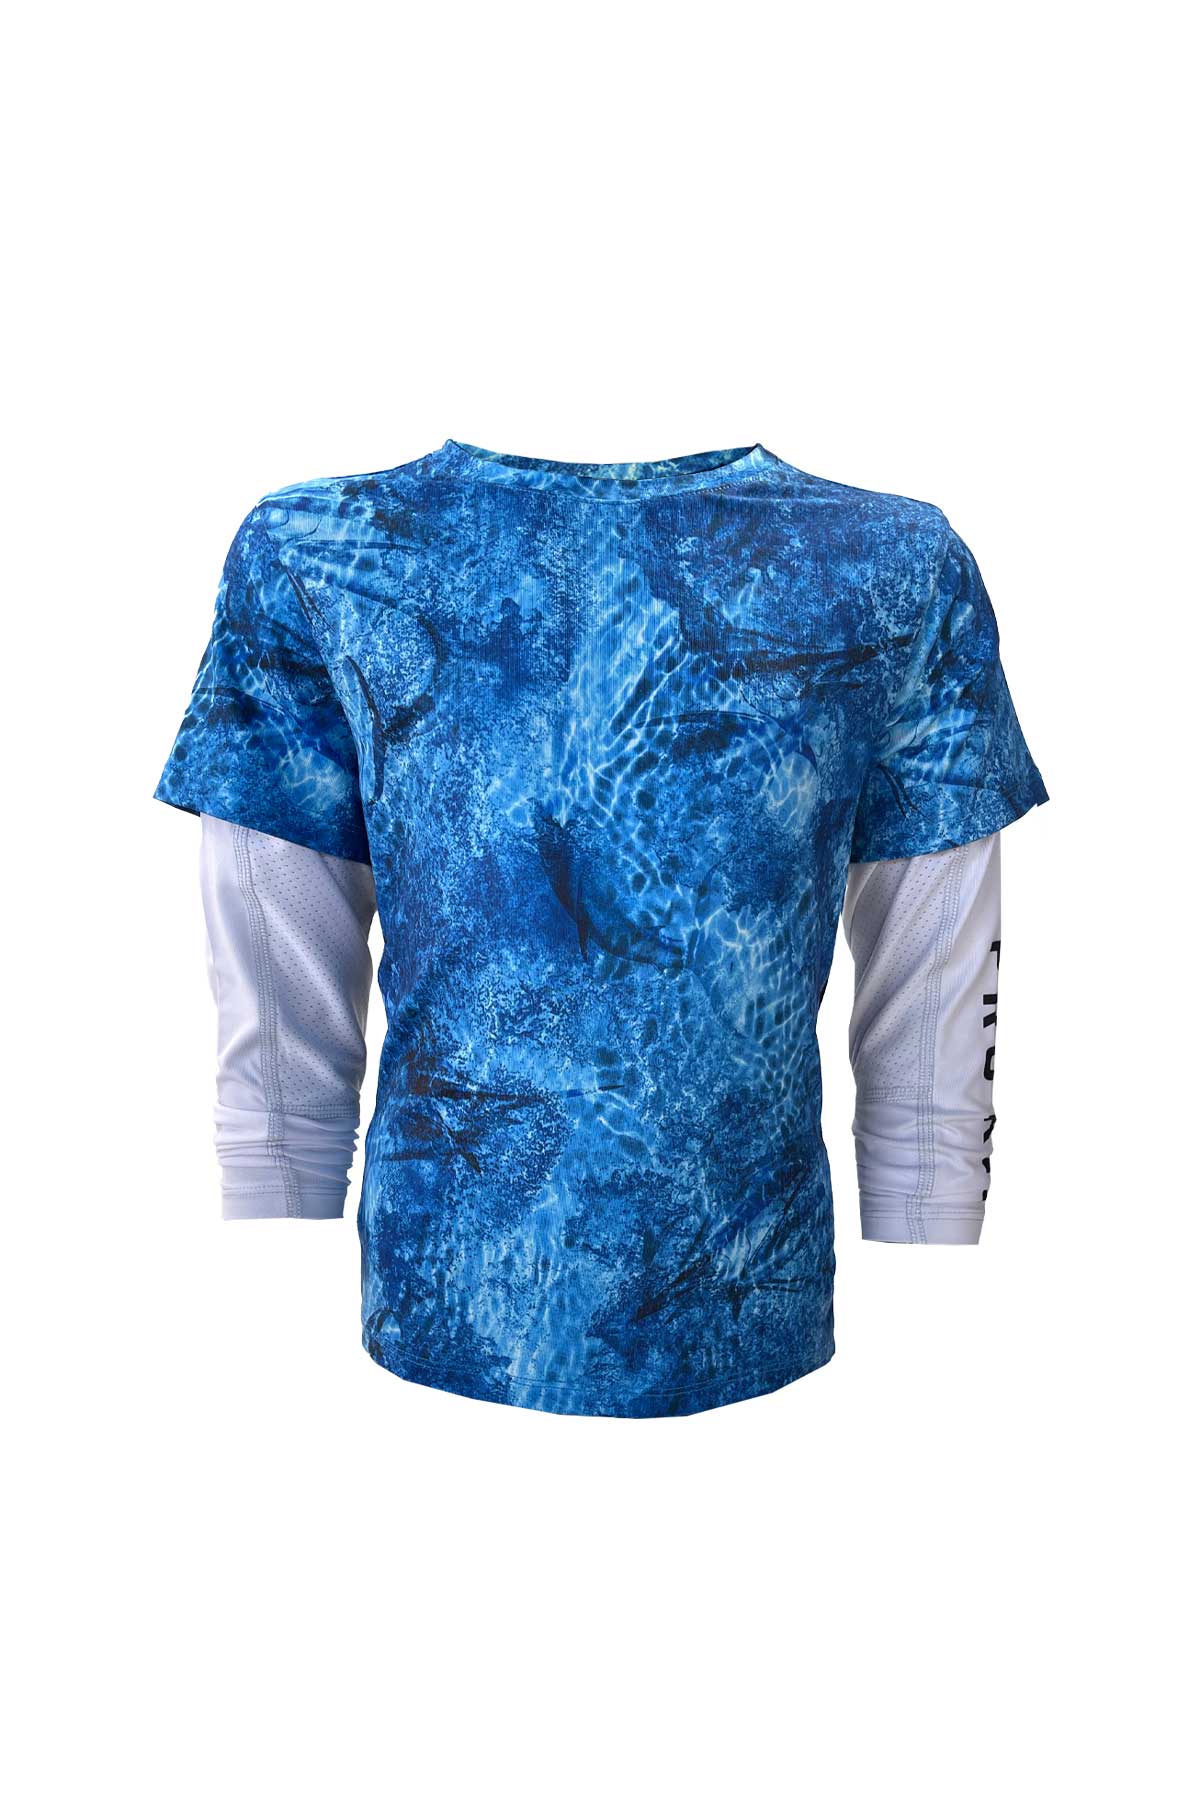 Ahoy Junior Long And Short Sleeve Together Fisherman Sailor Marlin Mania Patterned Blue UV Protected Shirt